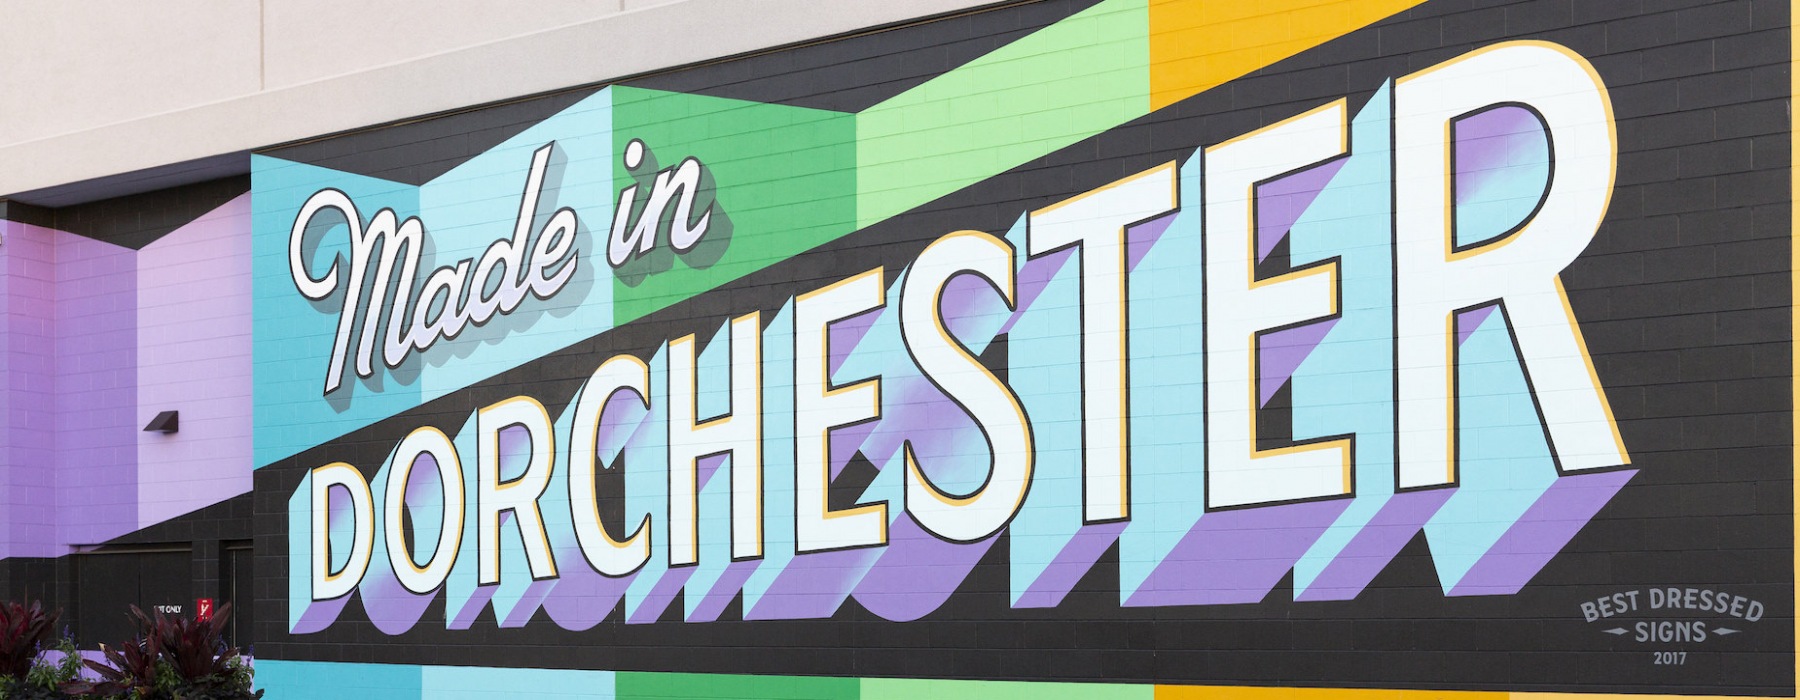 The Andi Apartments Dorchester, vibrant neighborhood wall art 